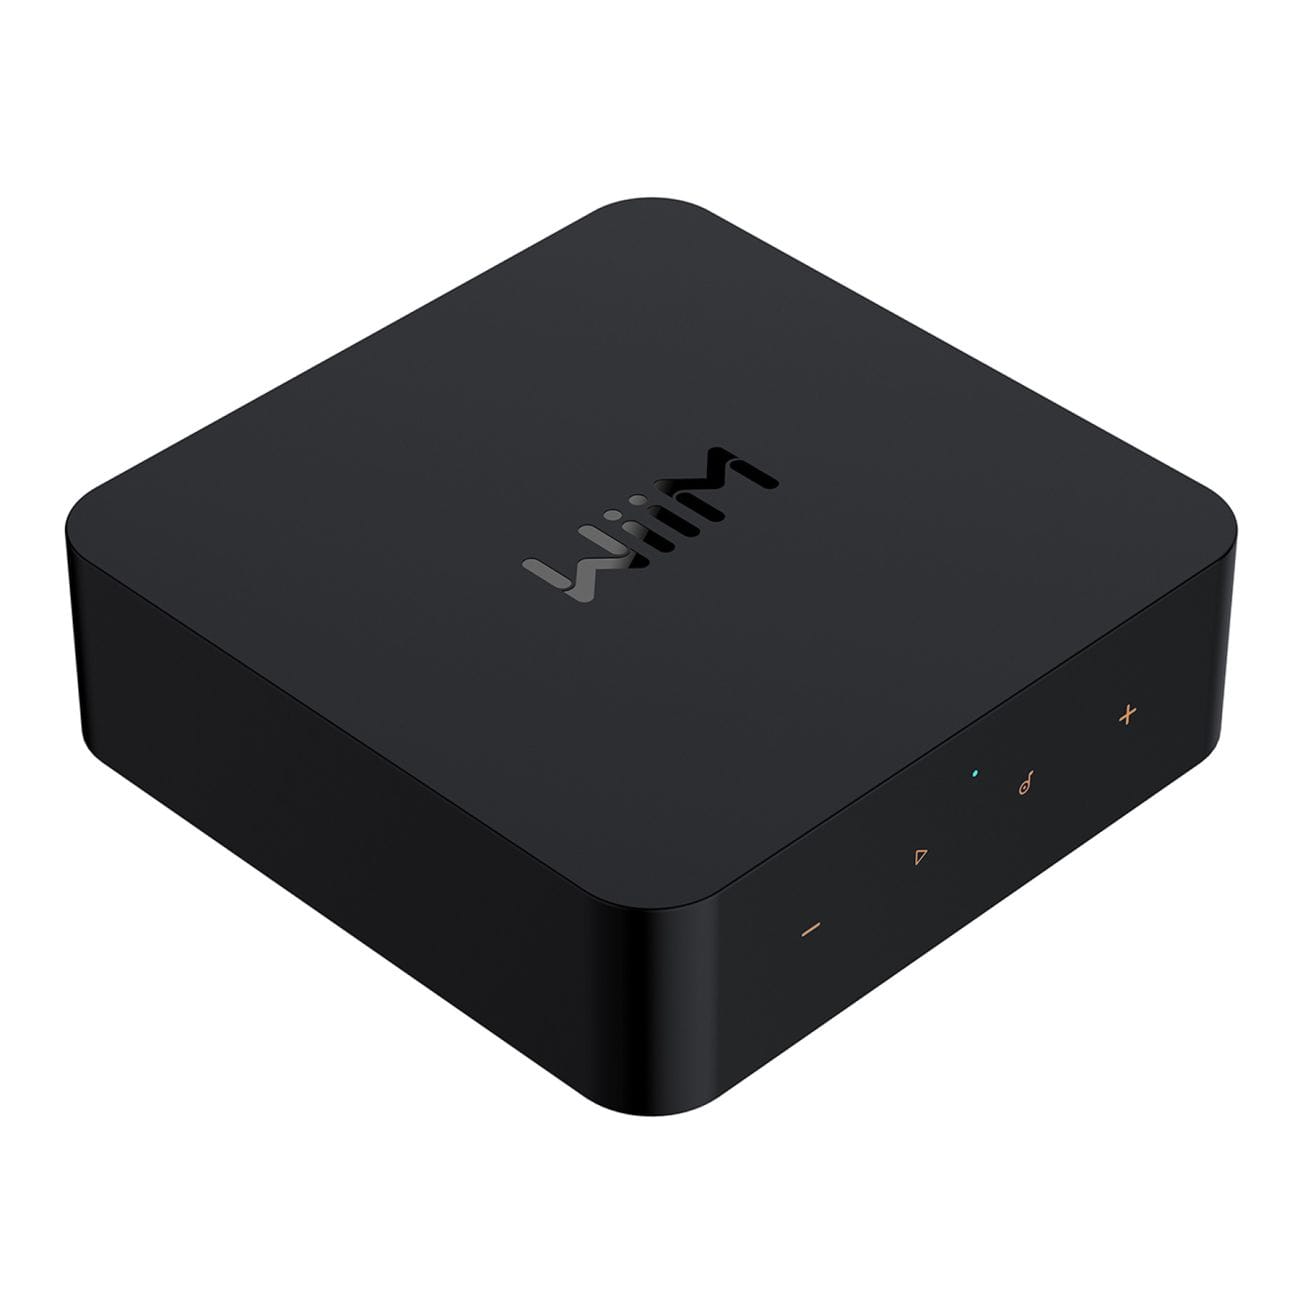 WiiM WiiM Pro Wireless Audio Streamer Hi-Res Lossless Music Streamers